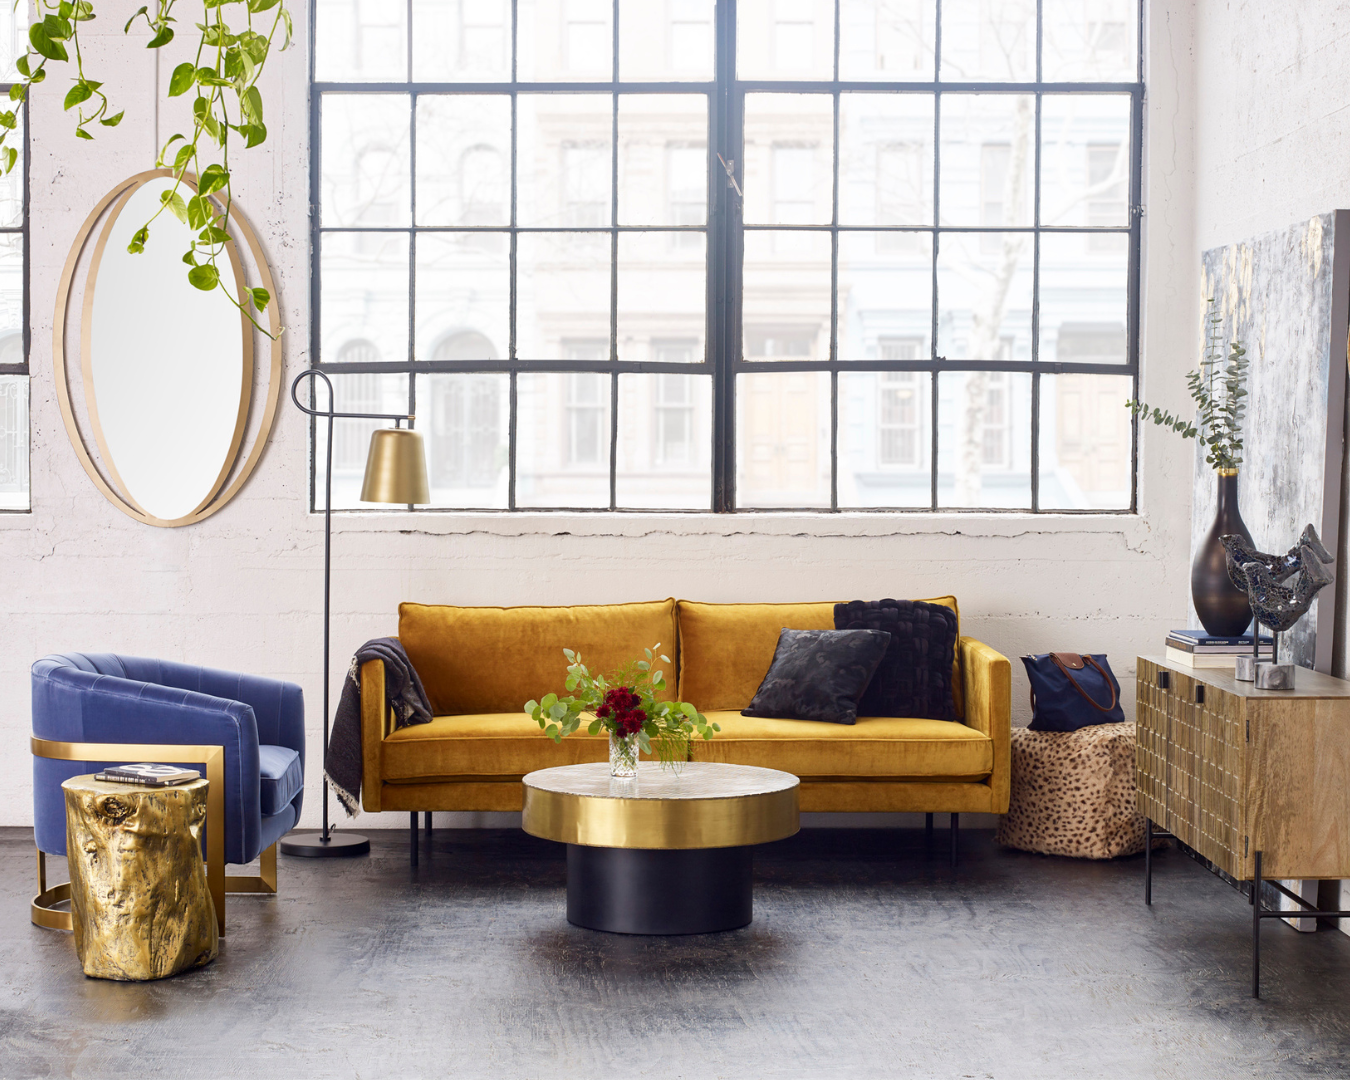 designer furniture and decor portland oregon vancouver washington